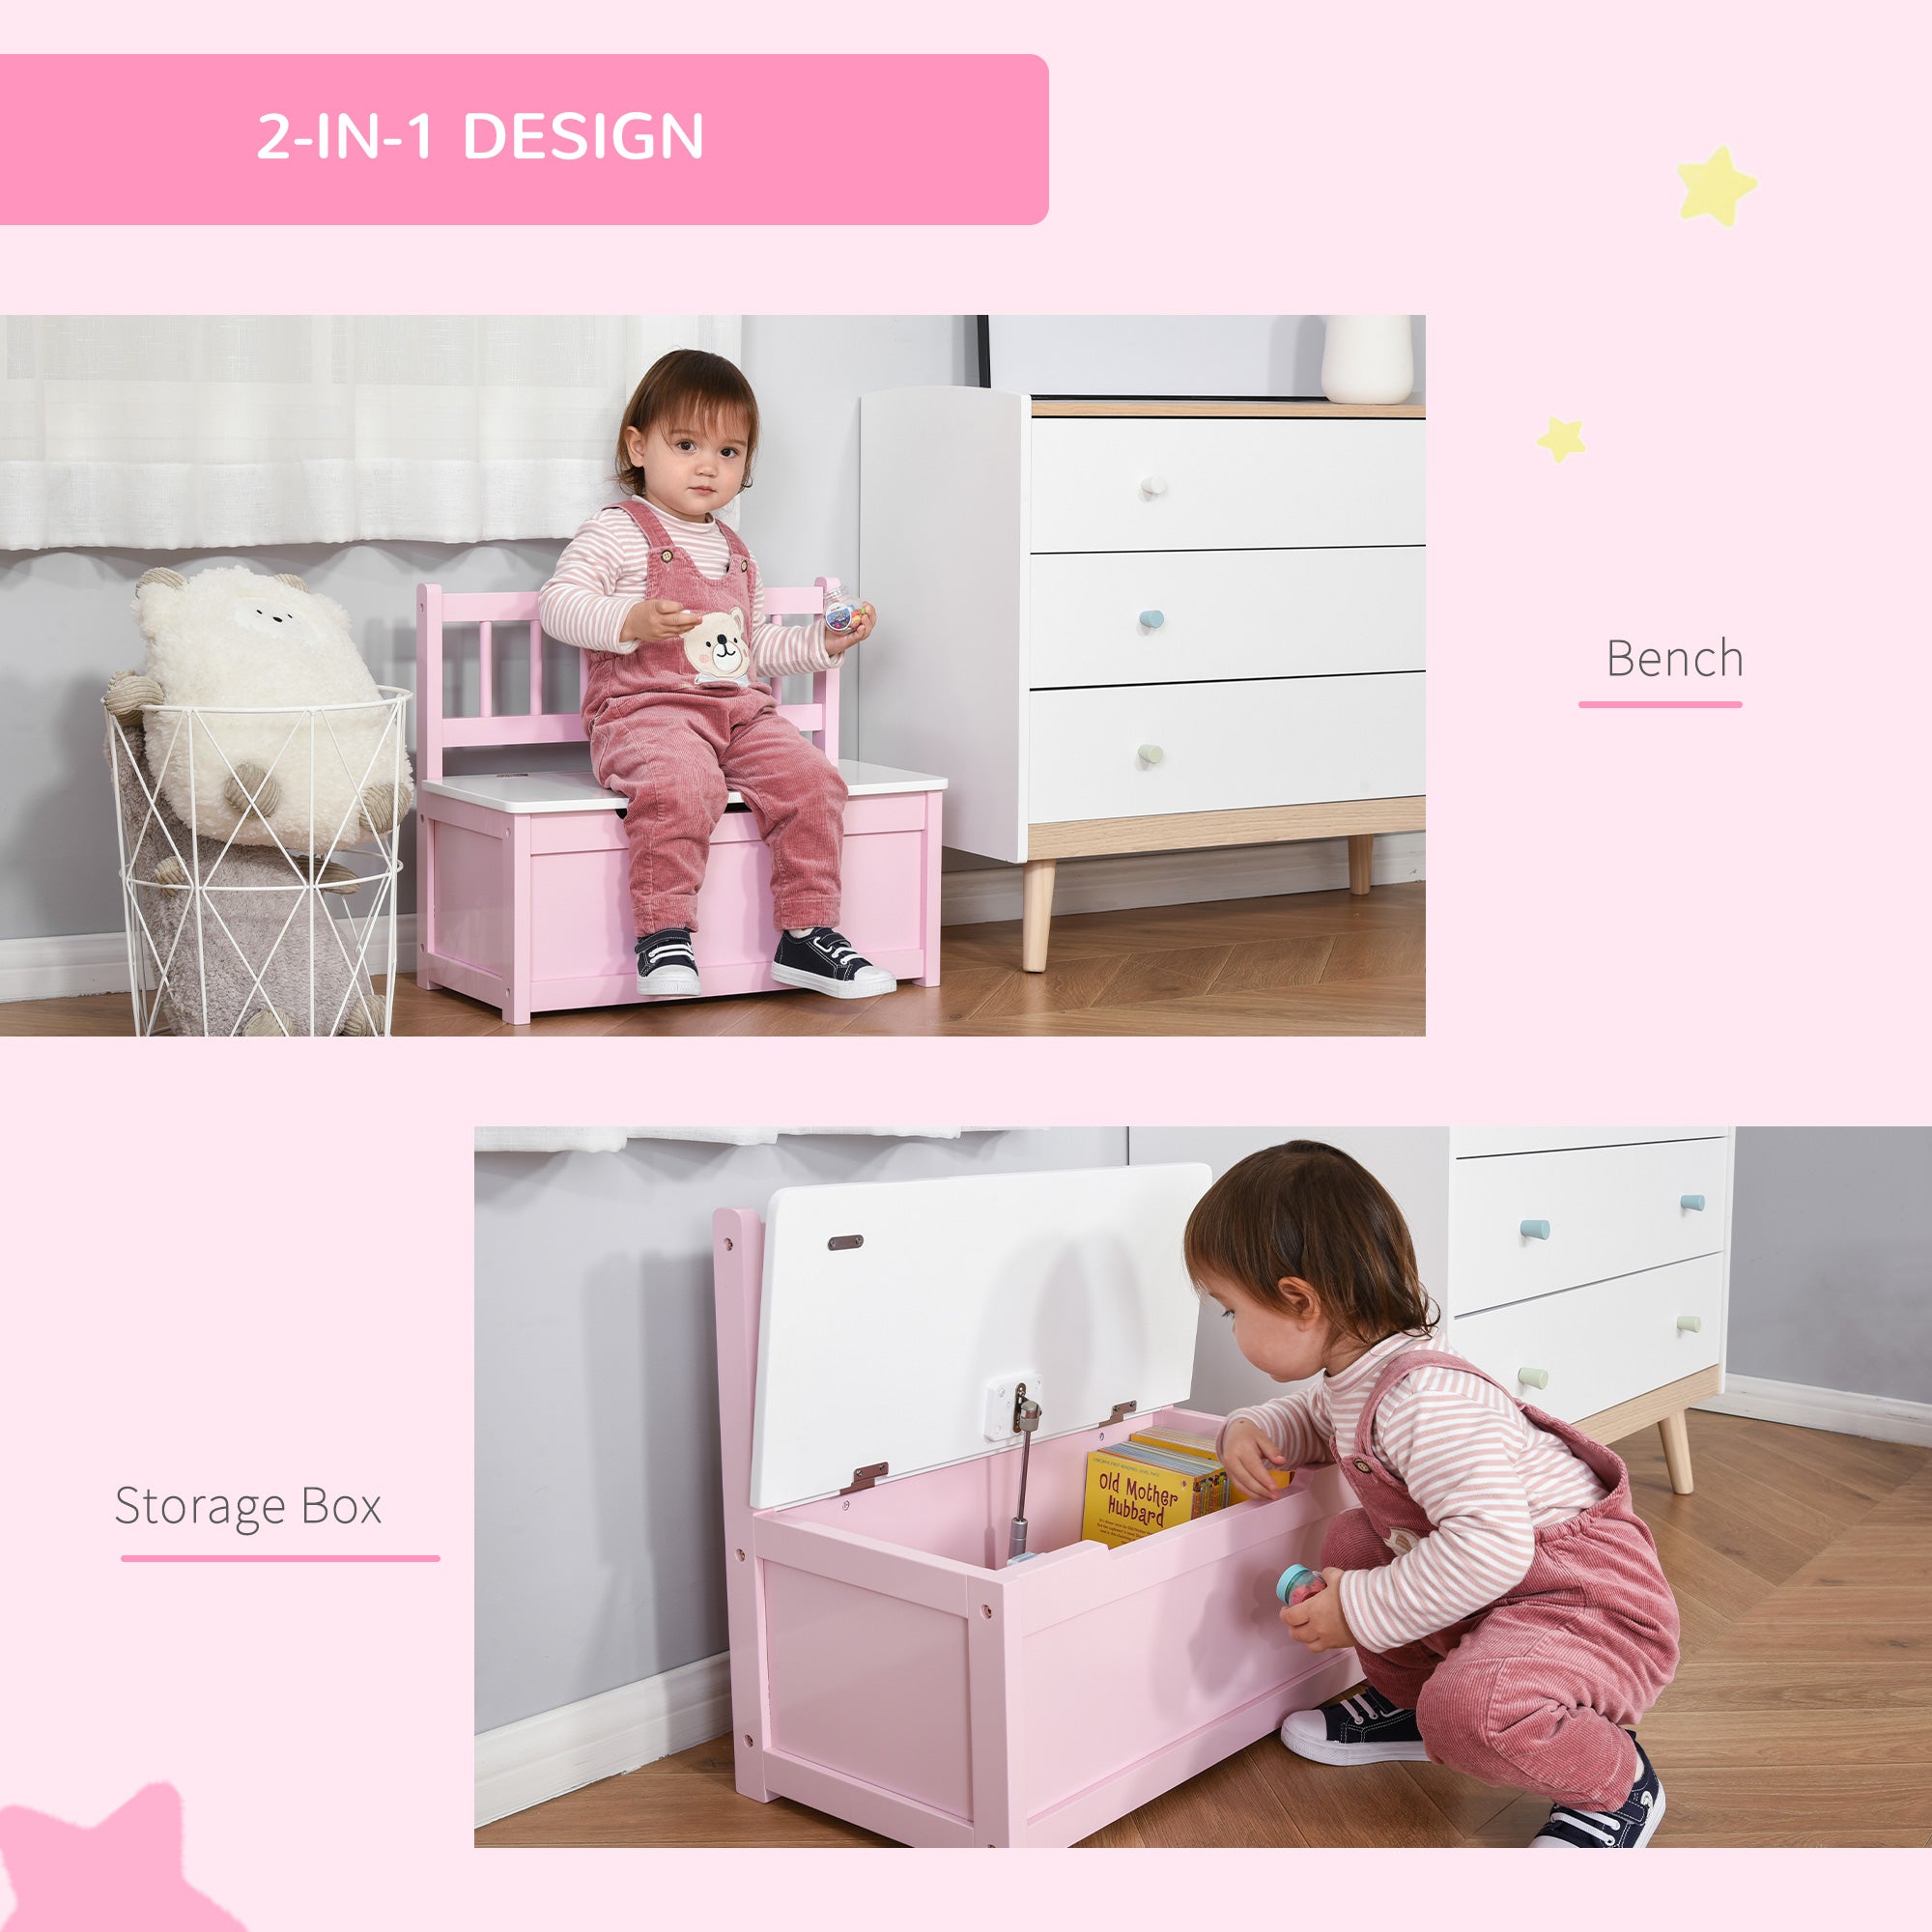 2-IN-1 Wooden Toy Box Kids Seat Bench Storage Chest Cabinet Organizer with Safety Pneumatic Rod 60 x 30 x 50cm Pink-4